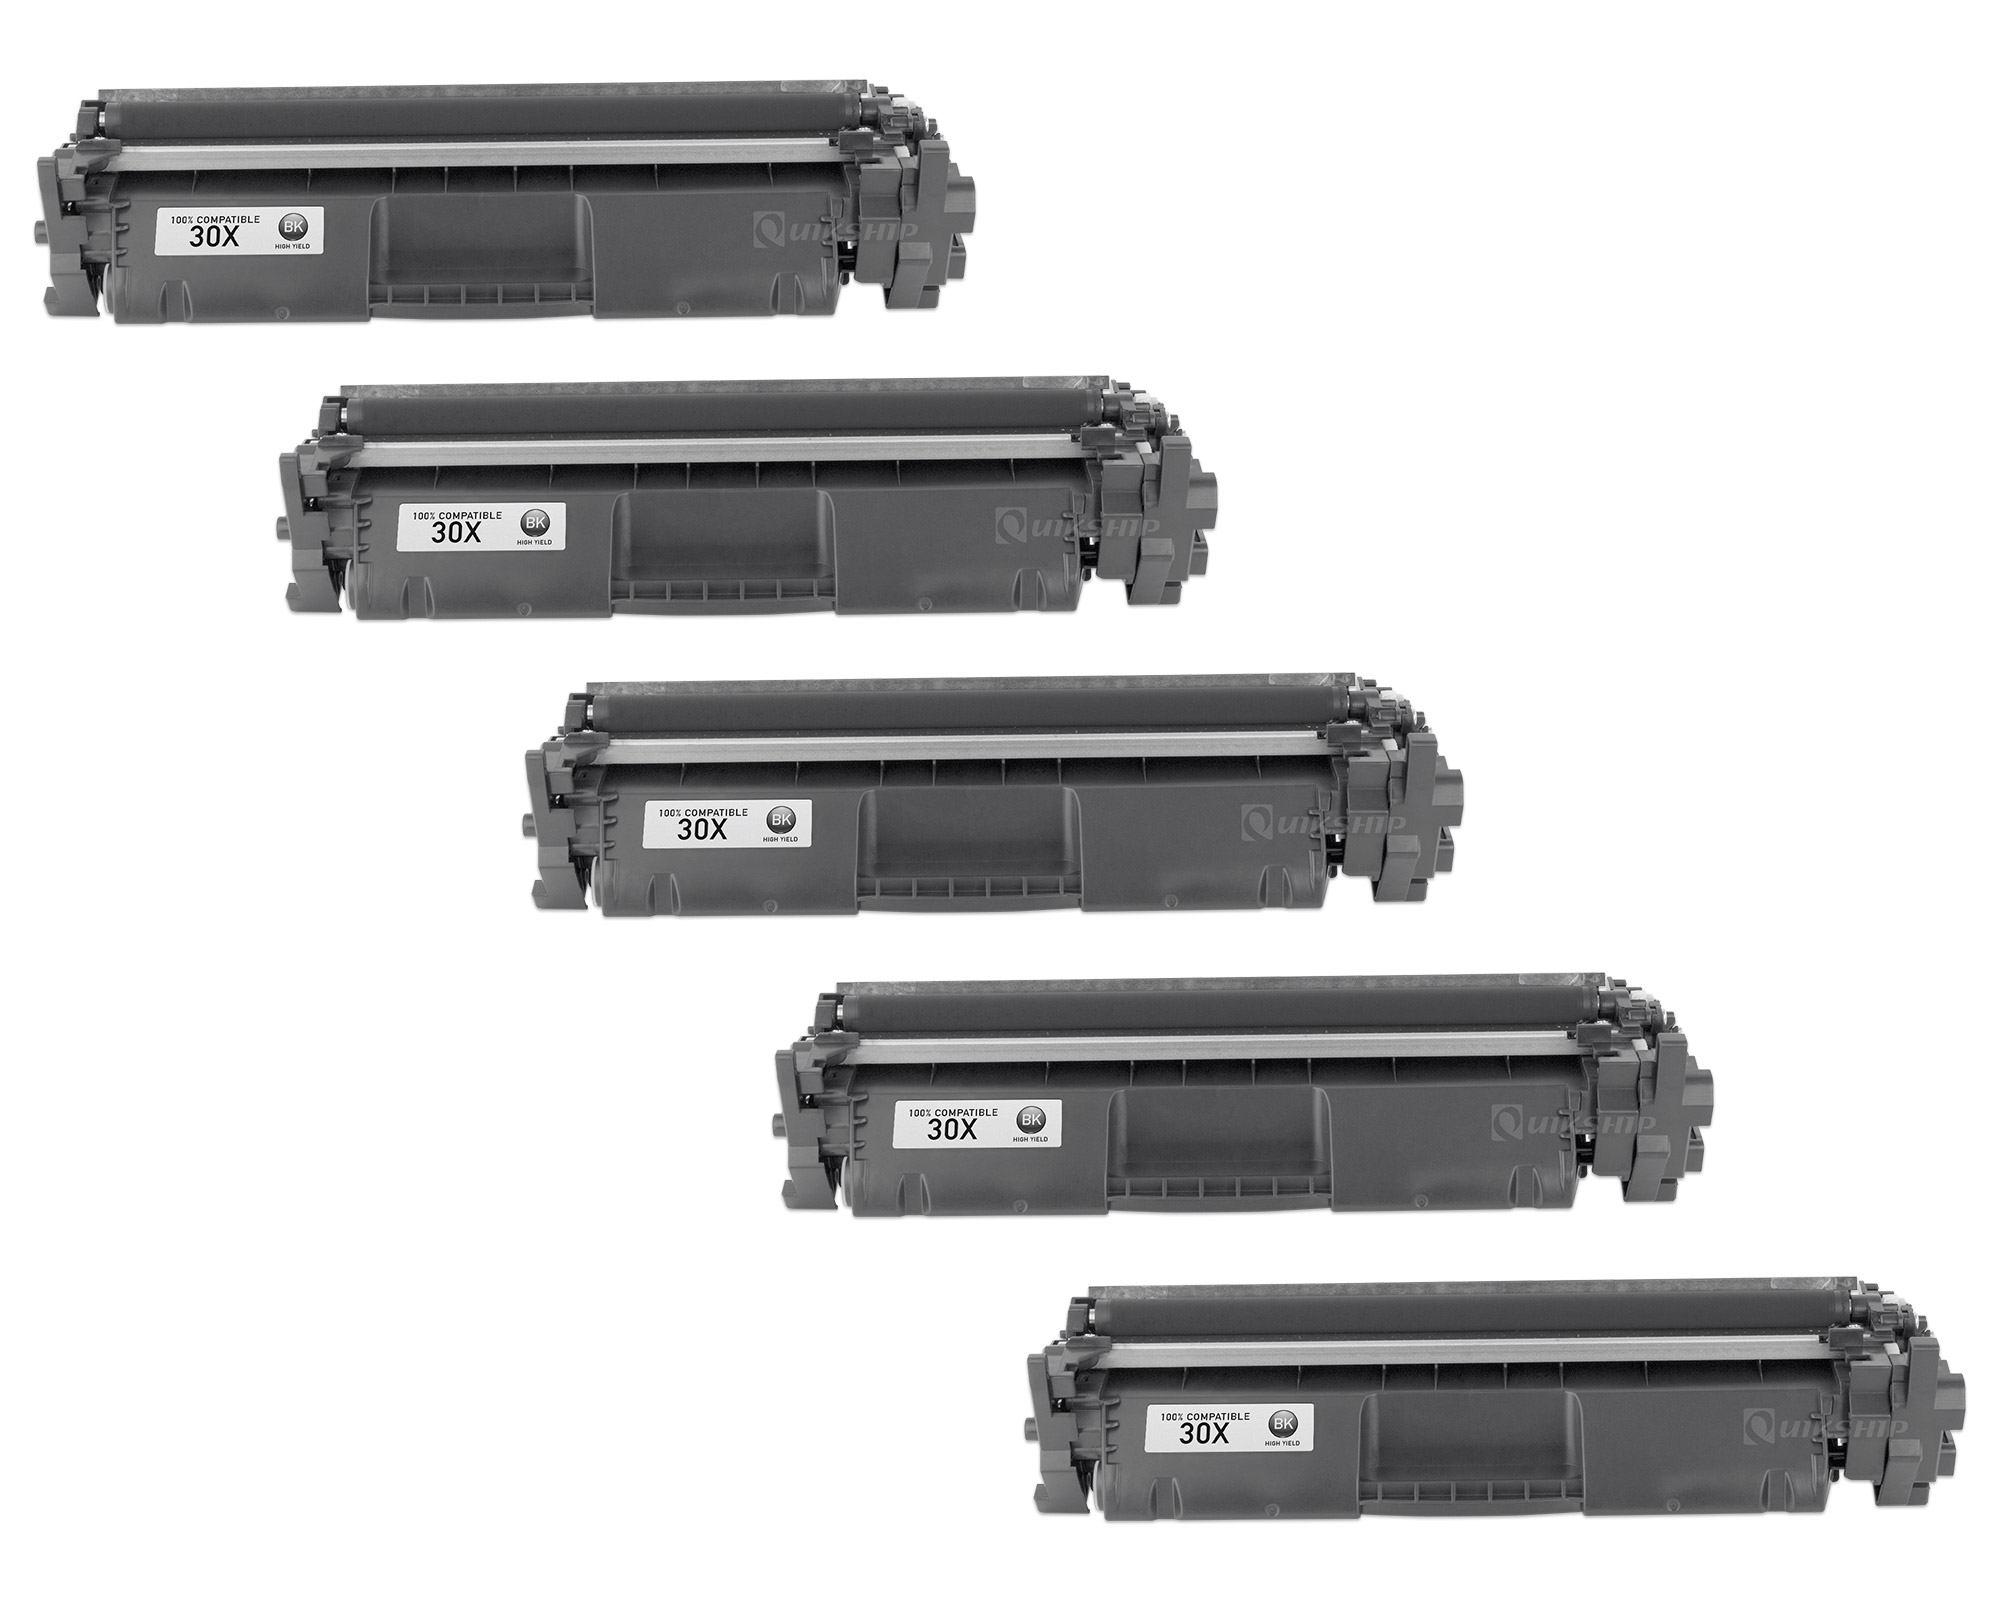 toner for hp laserjet p4015n printer